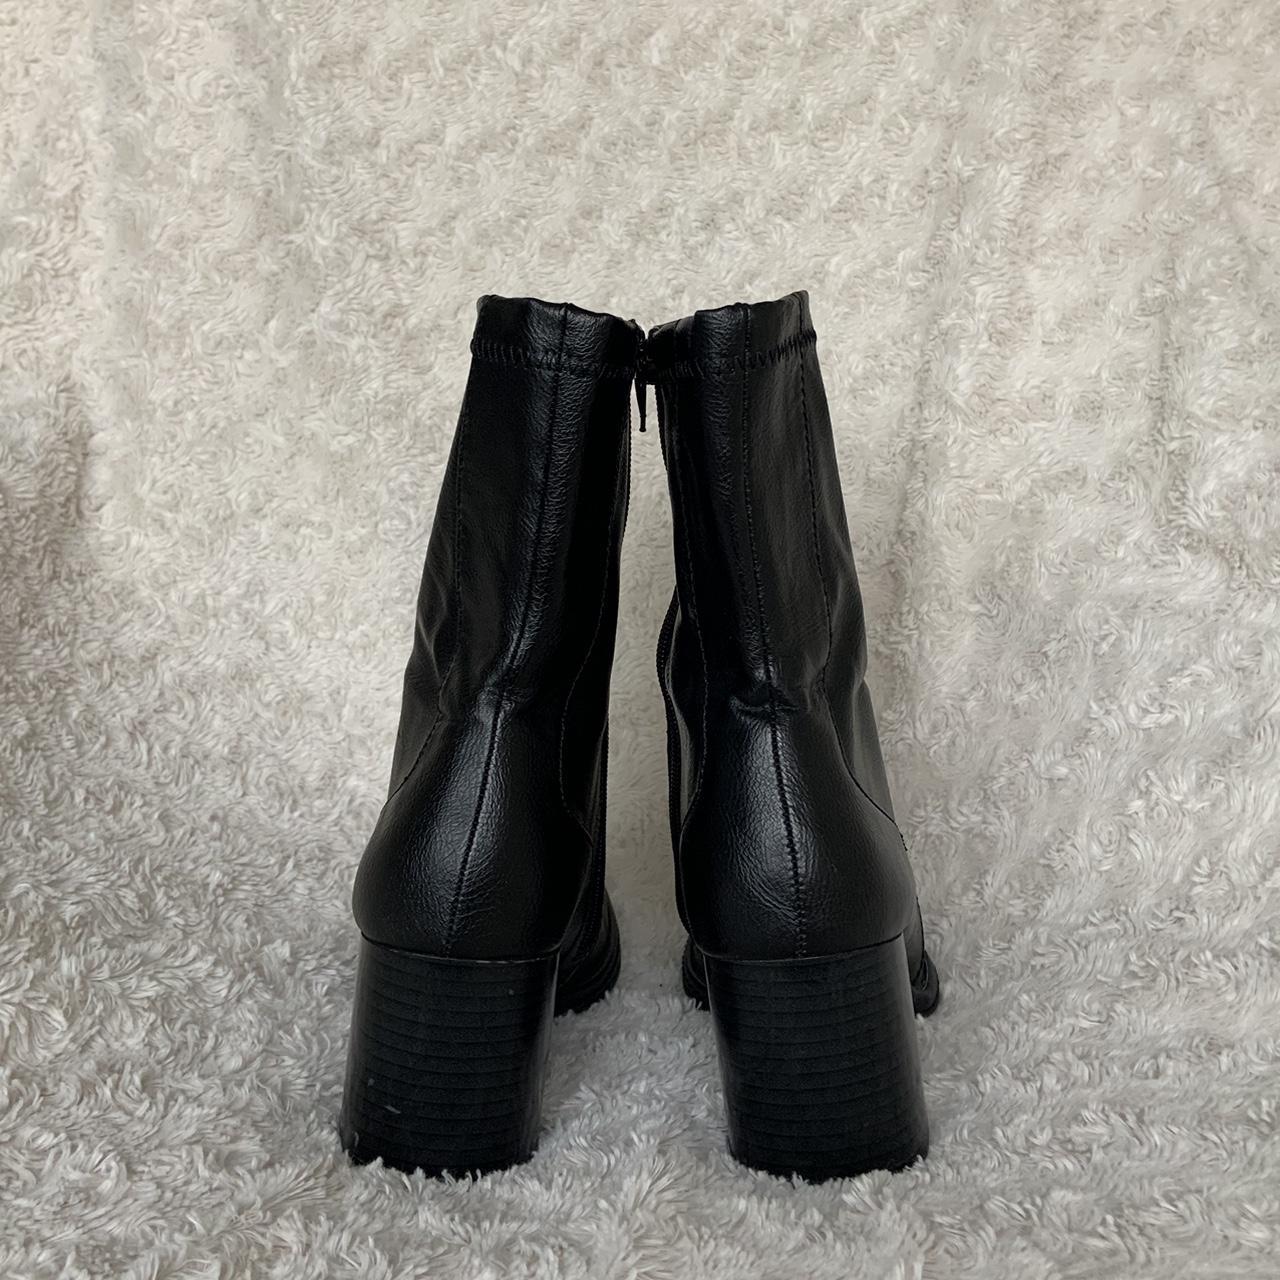 Aerosoles Women's Black Boots (3)